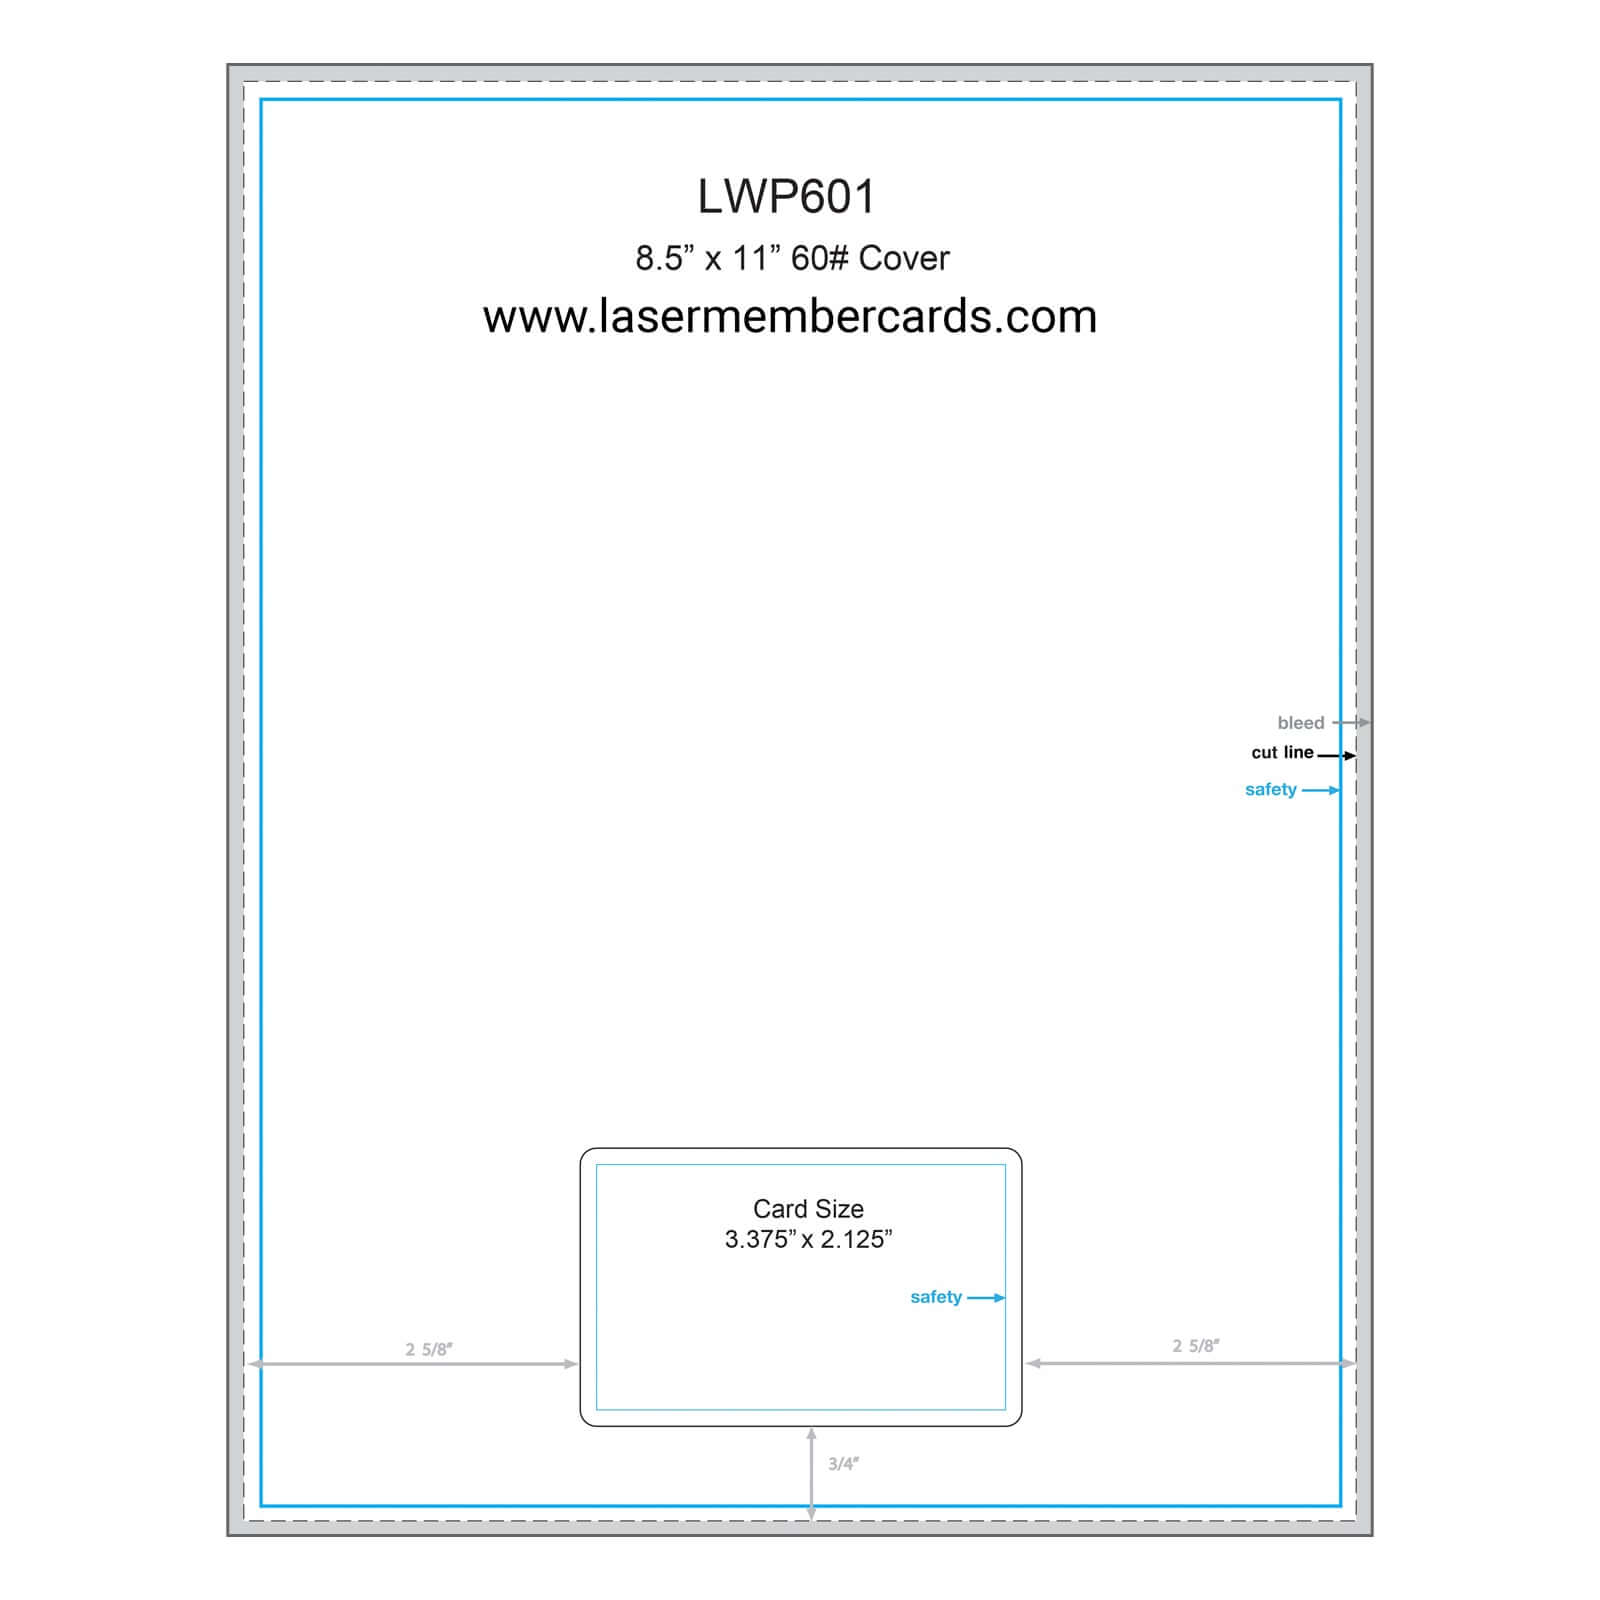 LWP601 Laser Membership Cards for Printers full sheet layout